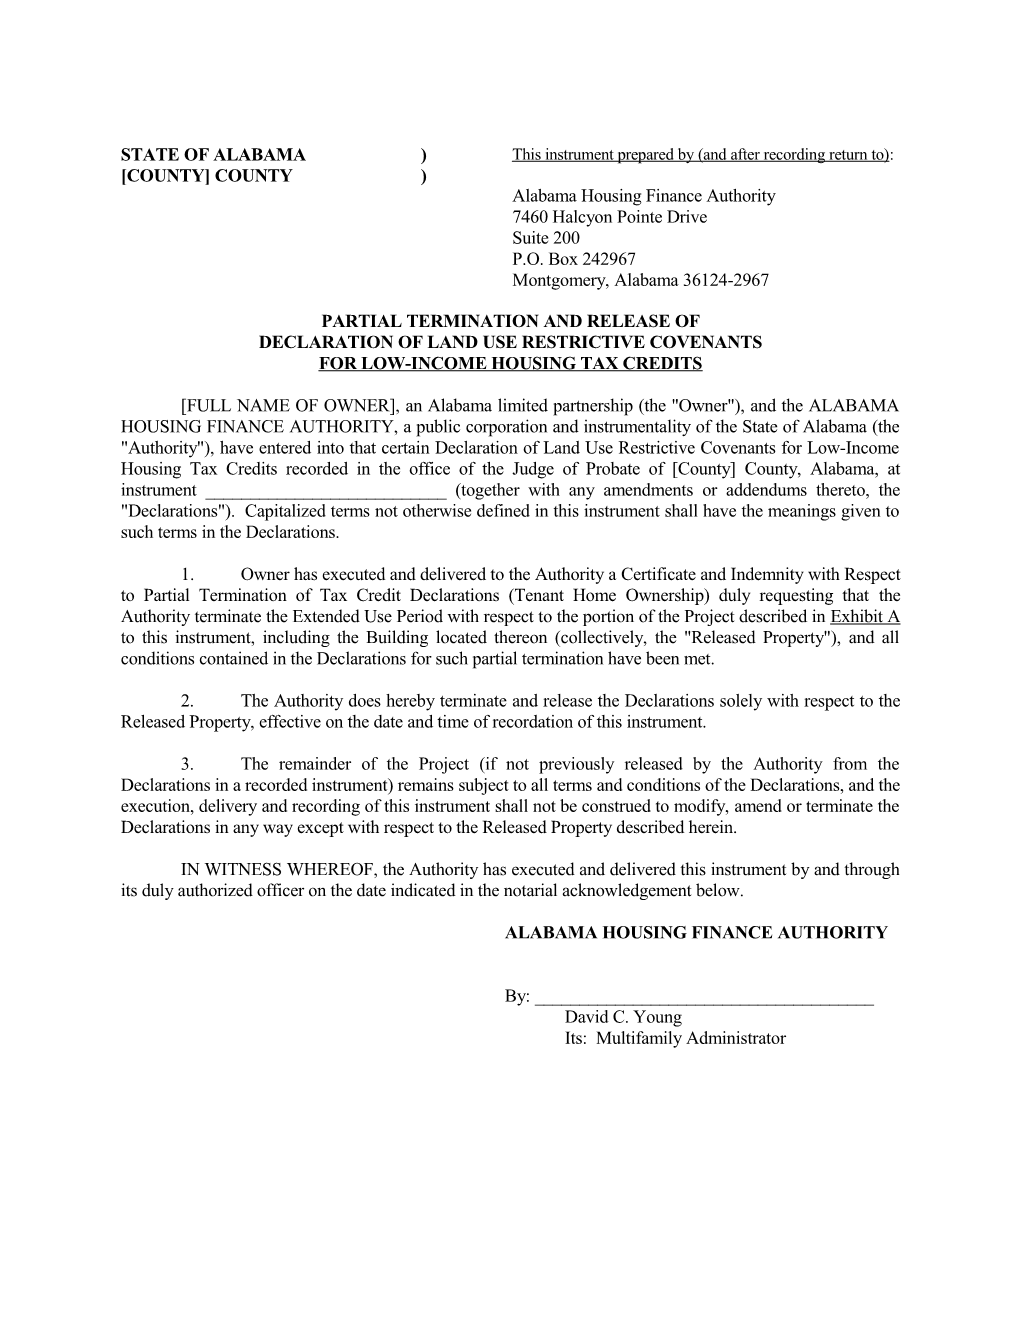 AHFA Specimen Partial Release of LURA for Tenant Ownership (01657959;1)